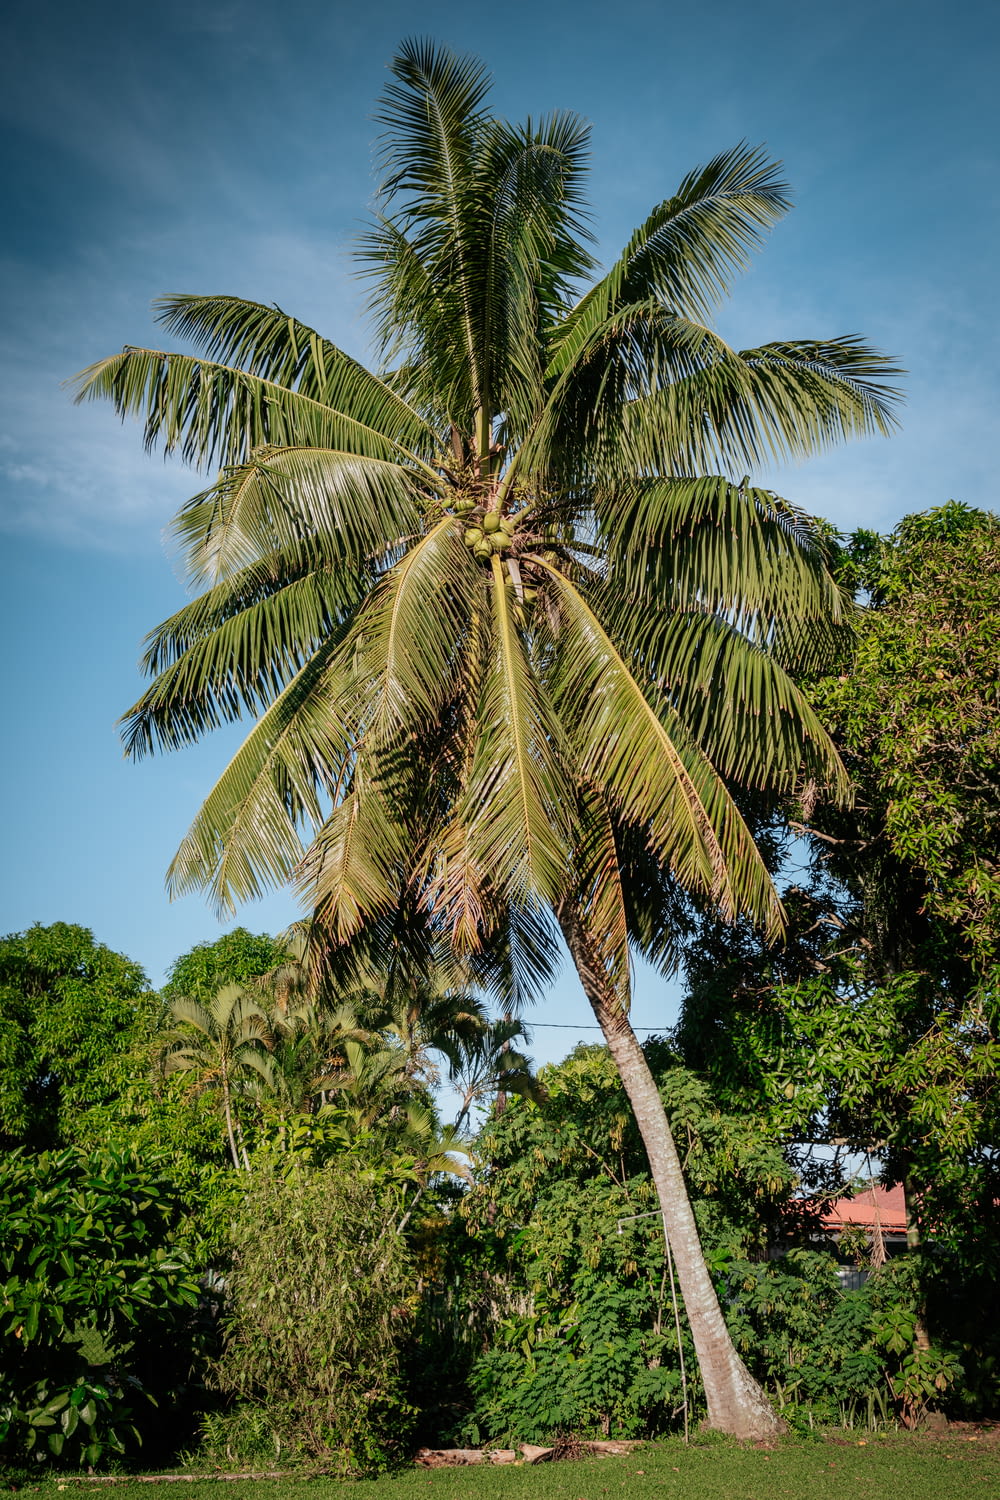 a palm tree in a yard